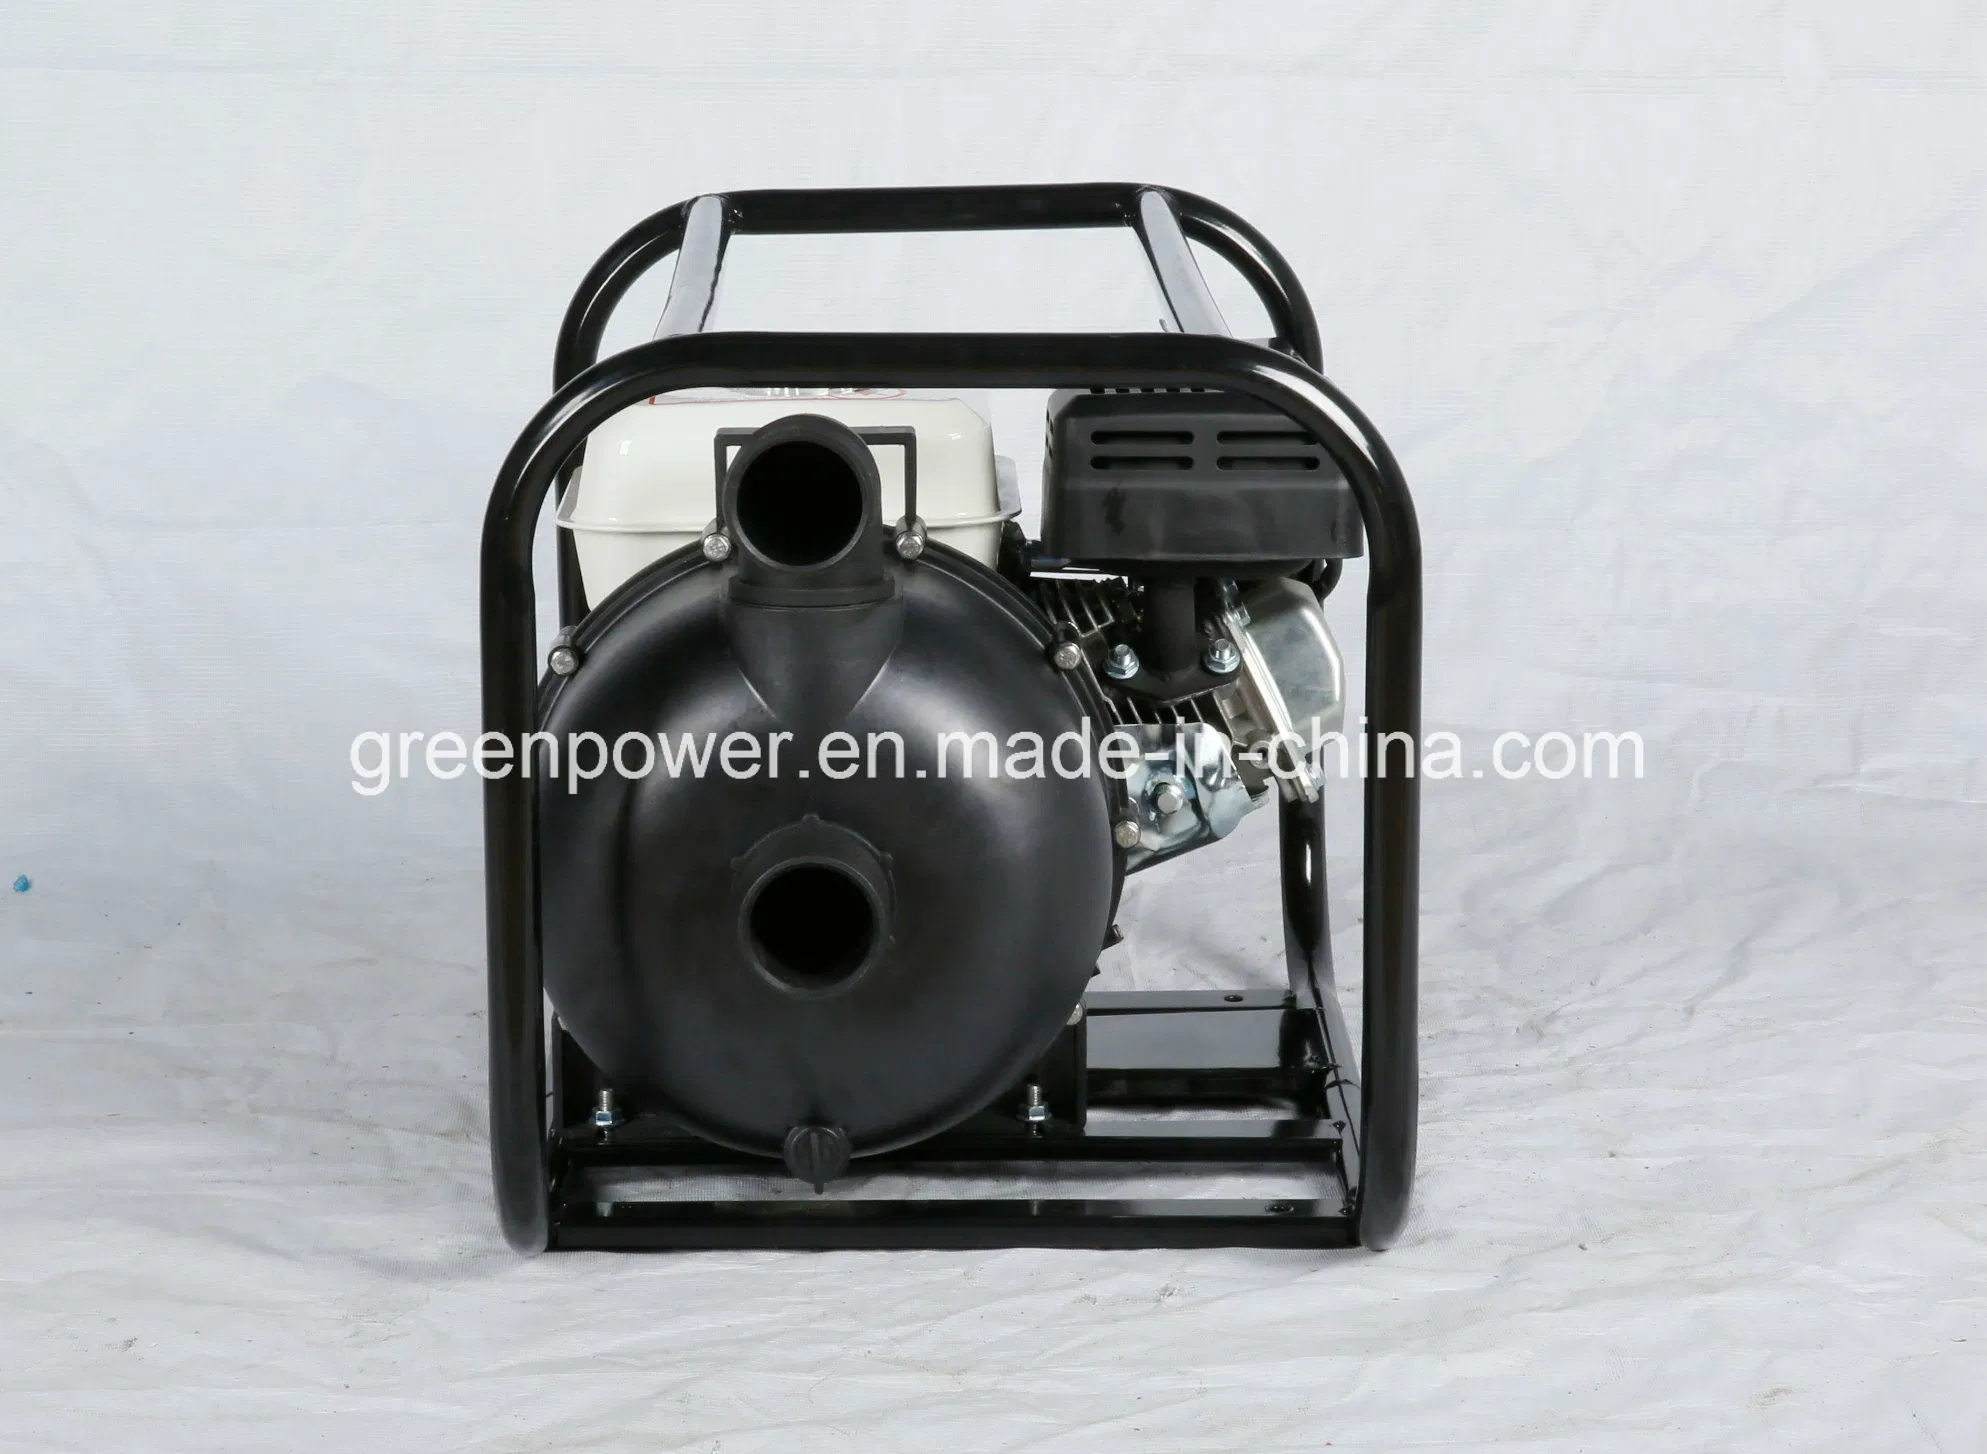 Water Pump Set (clear water pump, chemical pump, Kerosene/petrol pump)